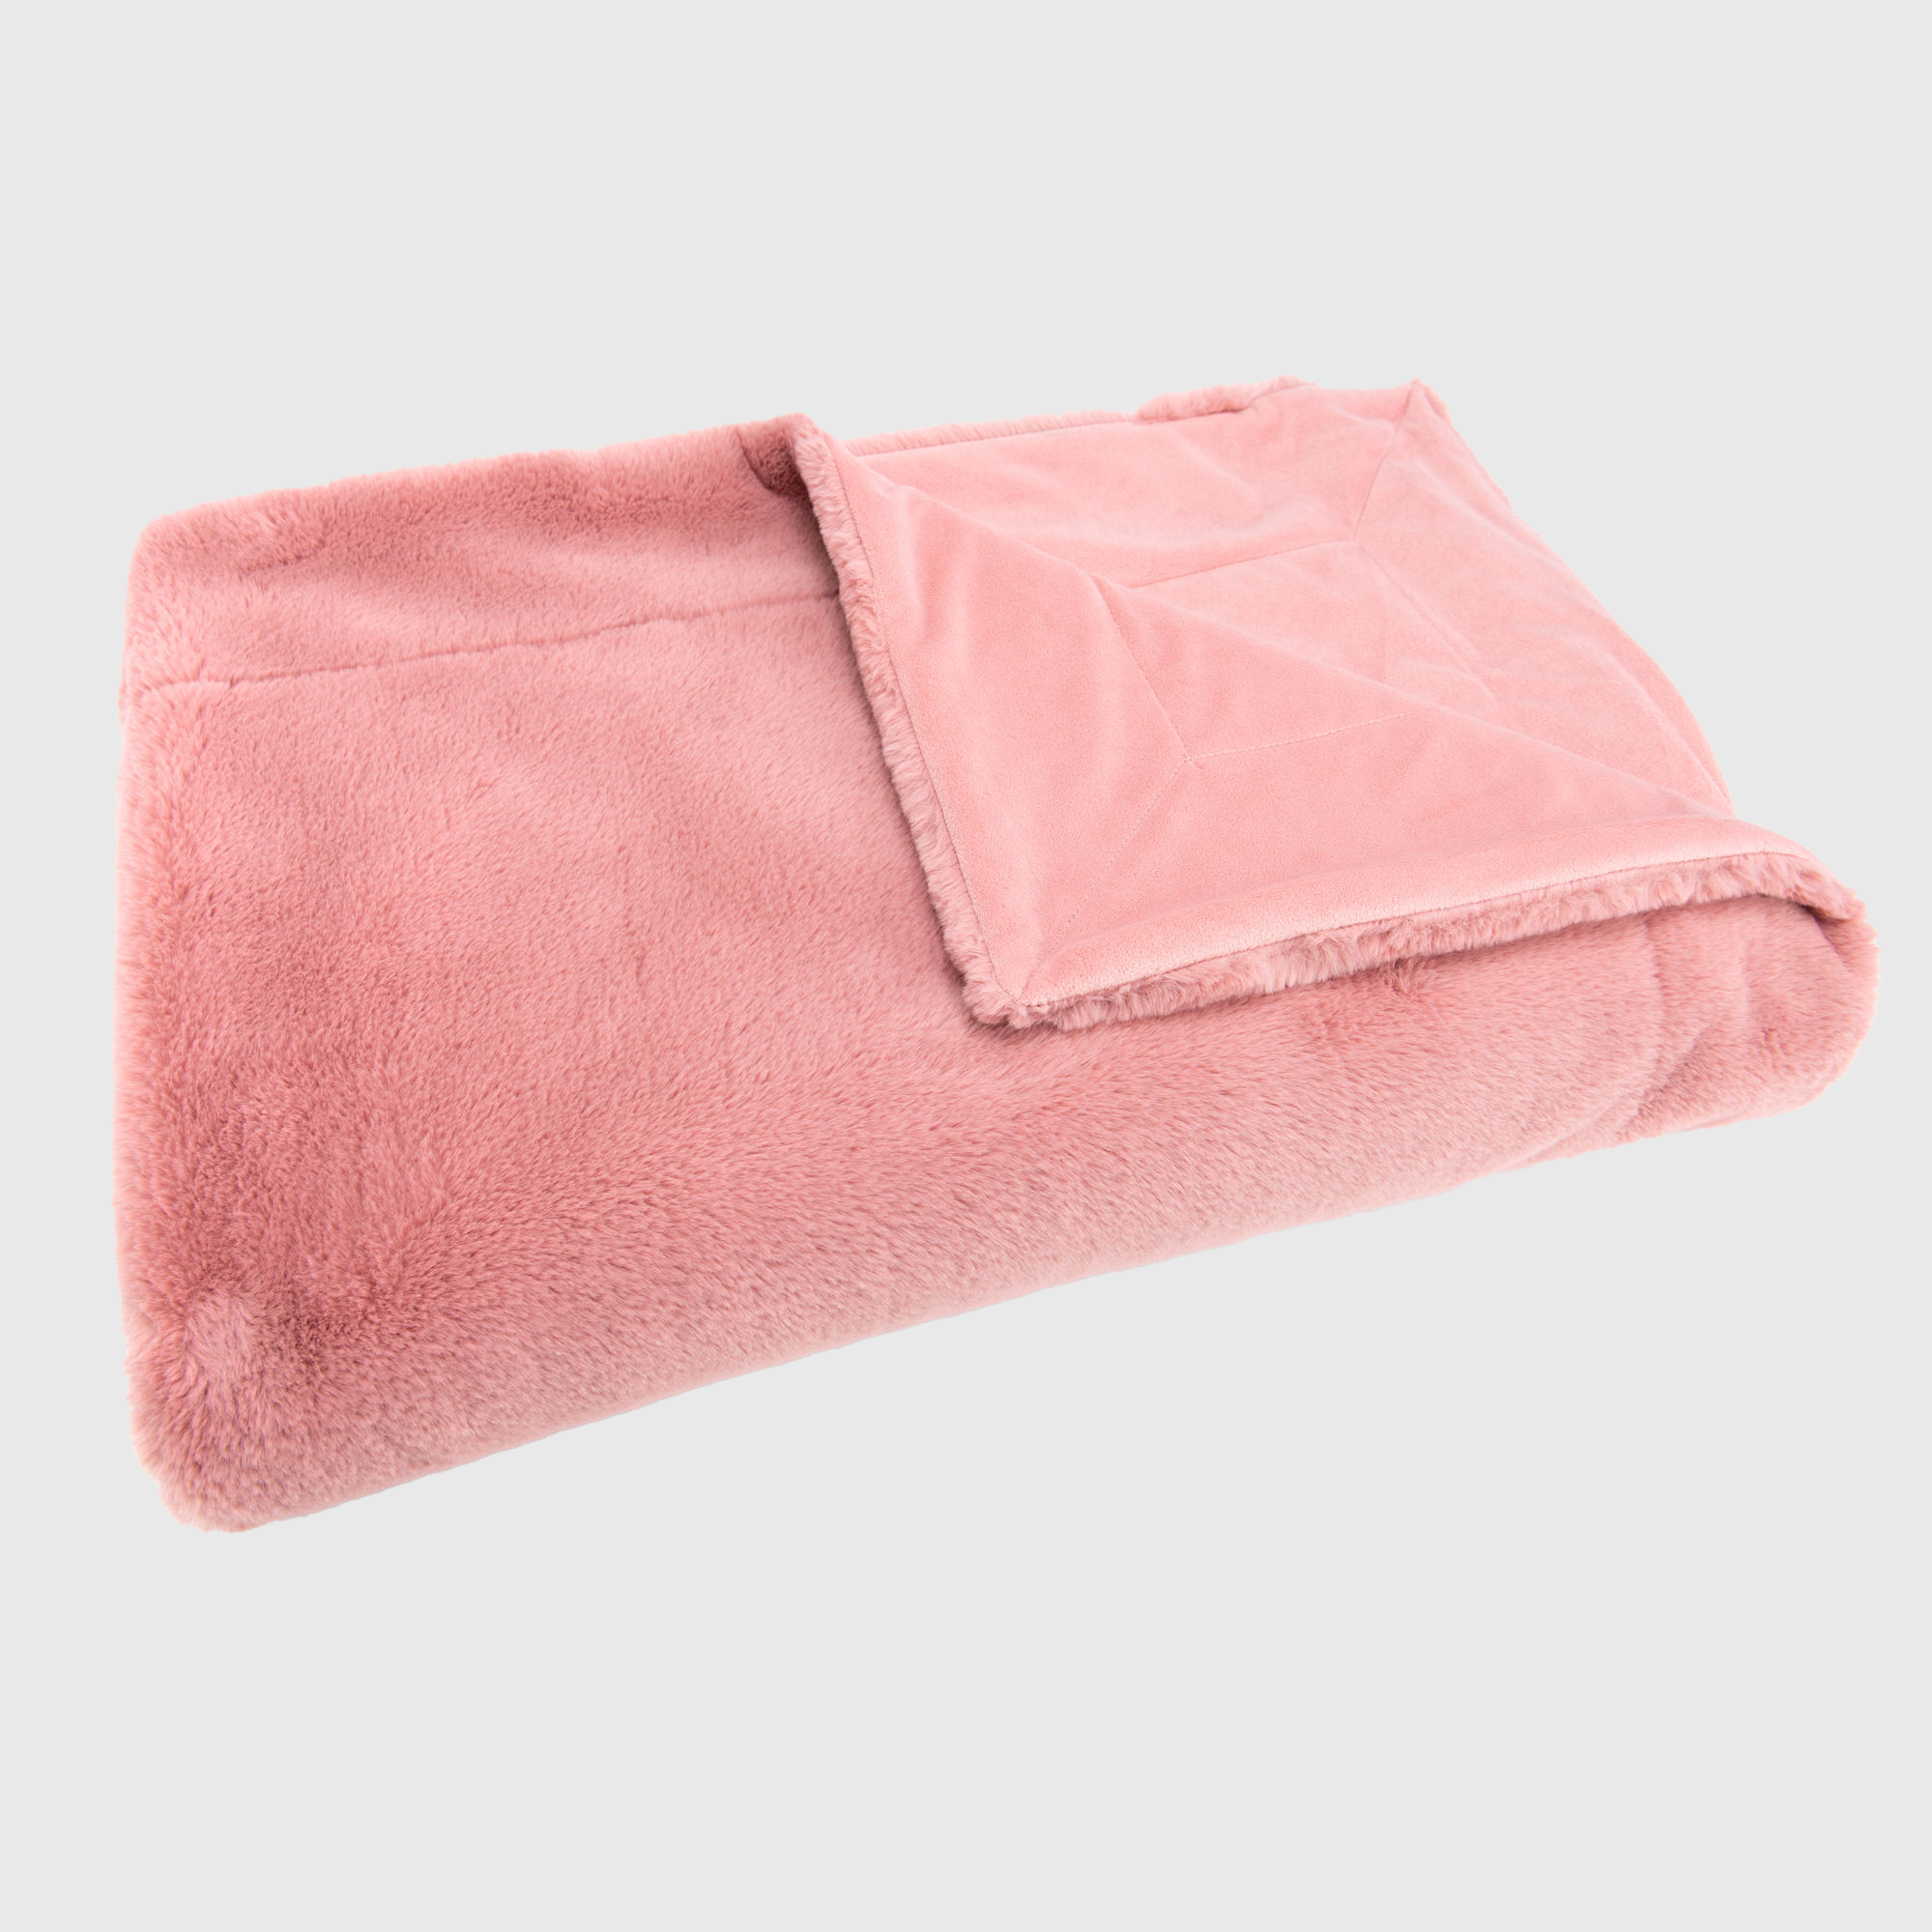 Microsensoft fleece blanket 150x180cm